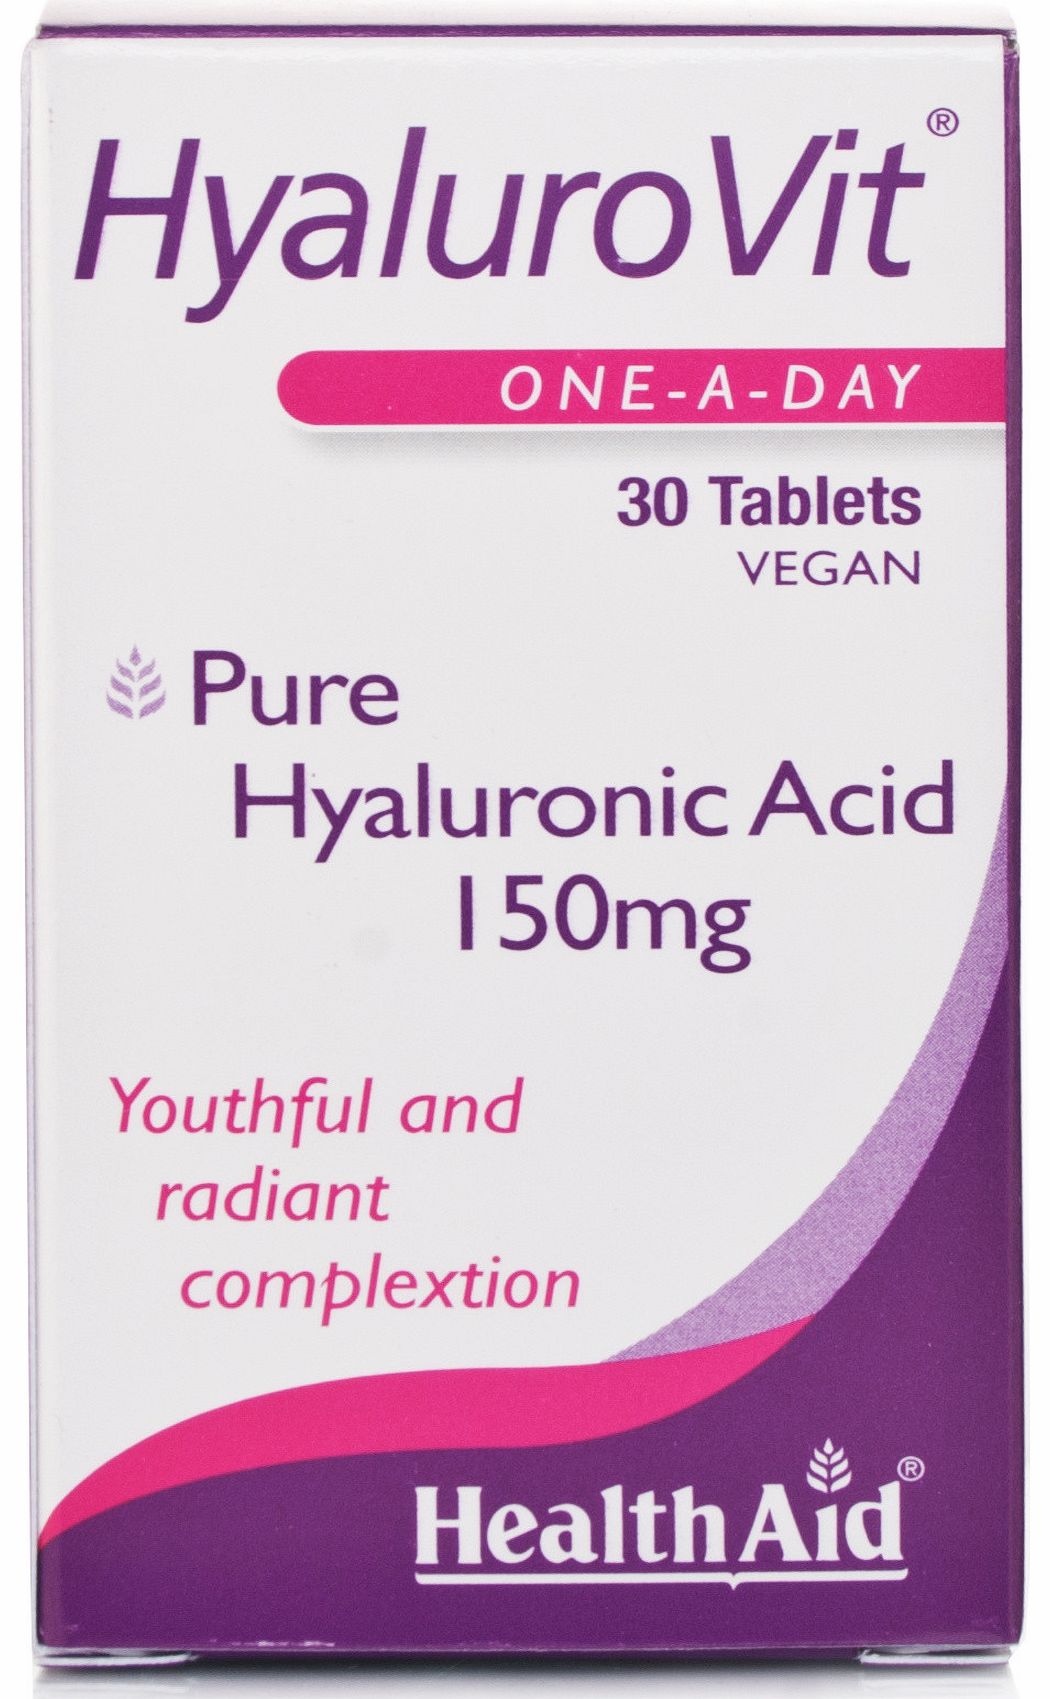 Health Aid HyaluroVit tablets